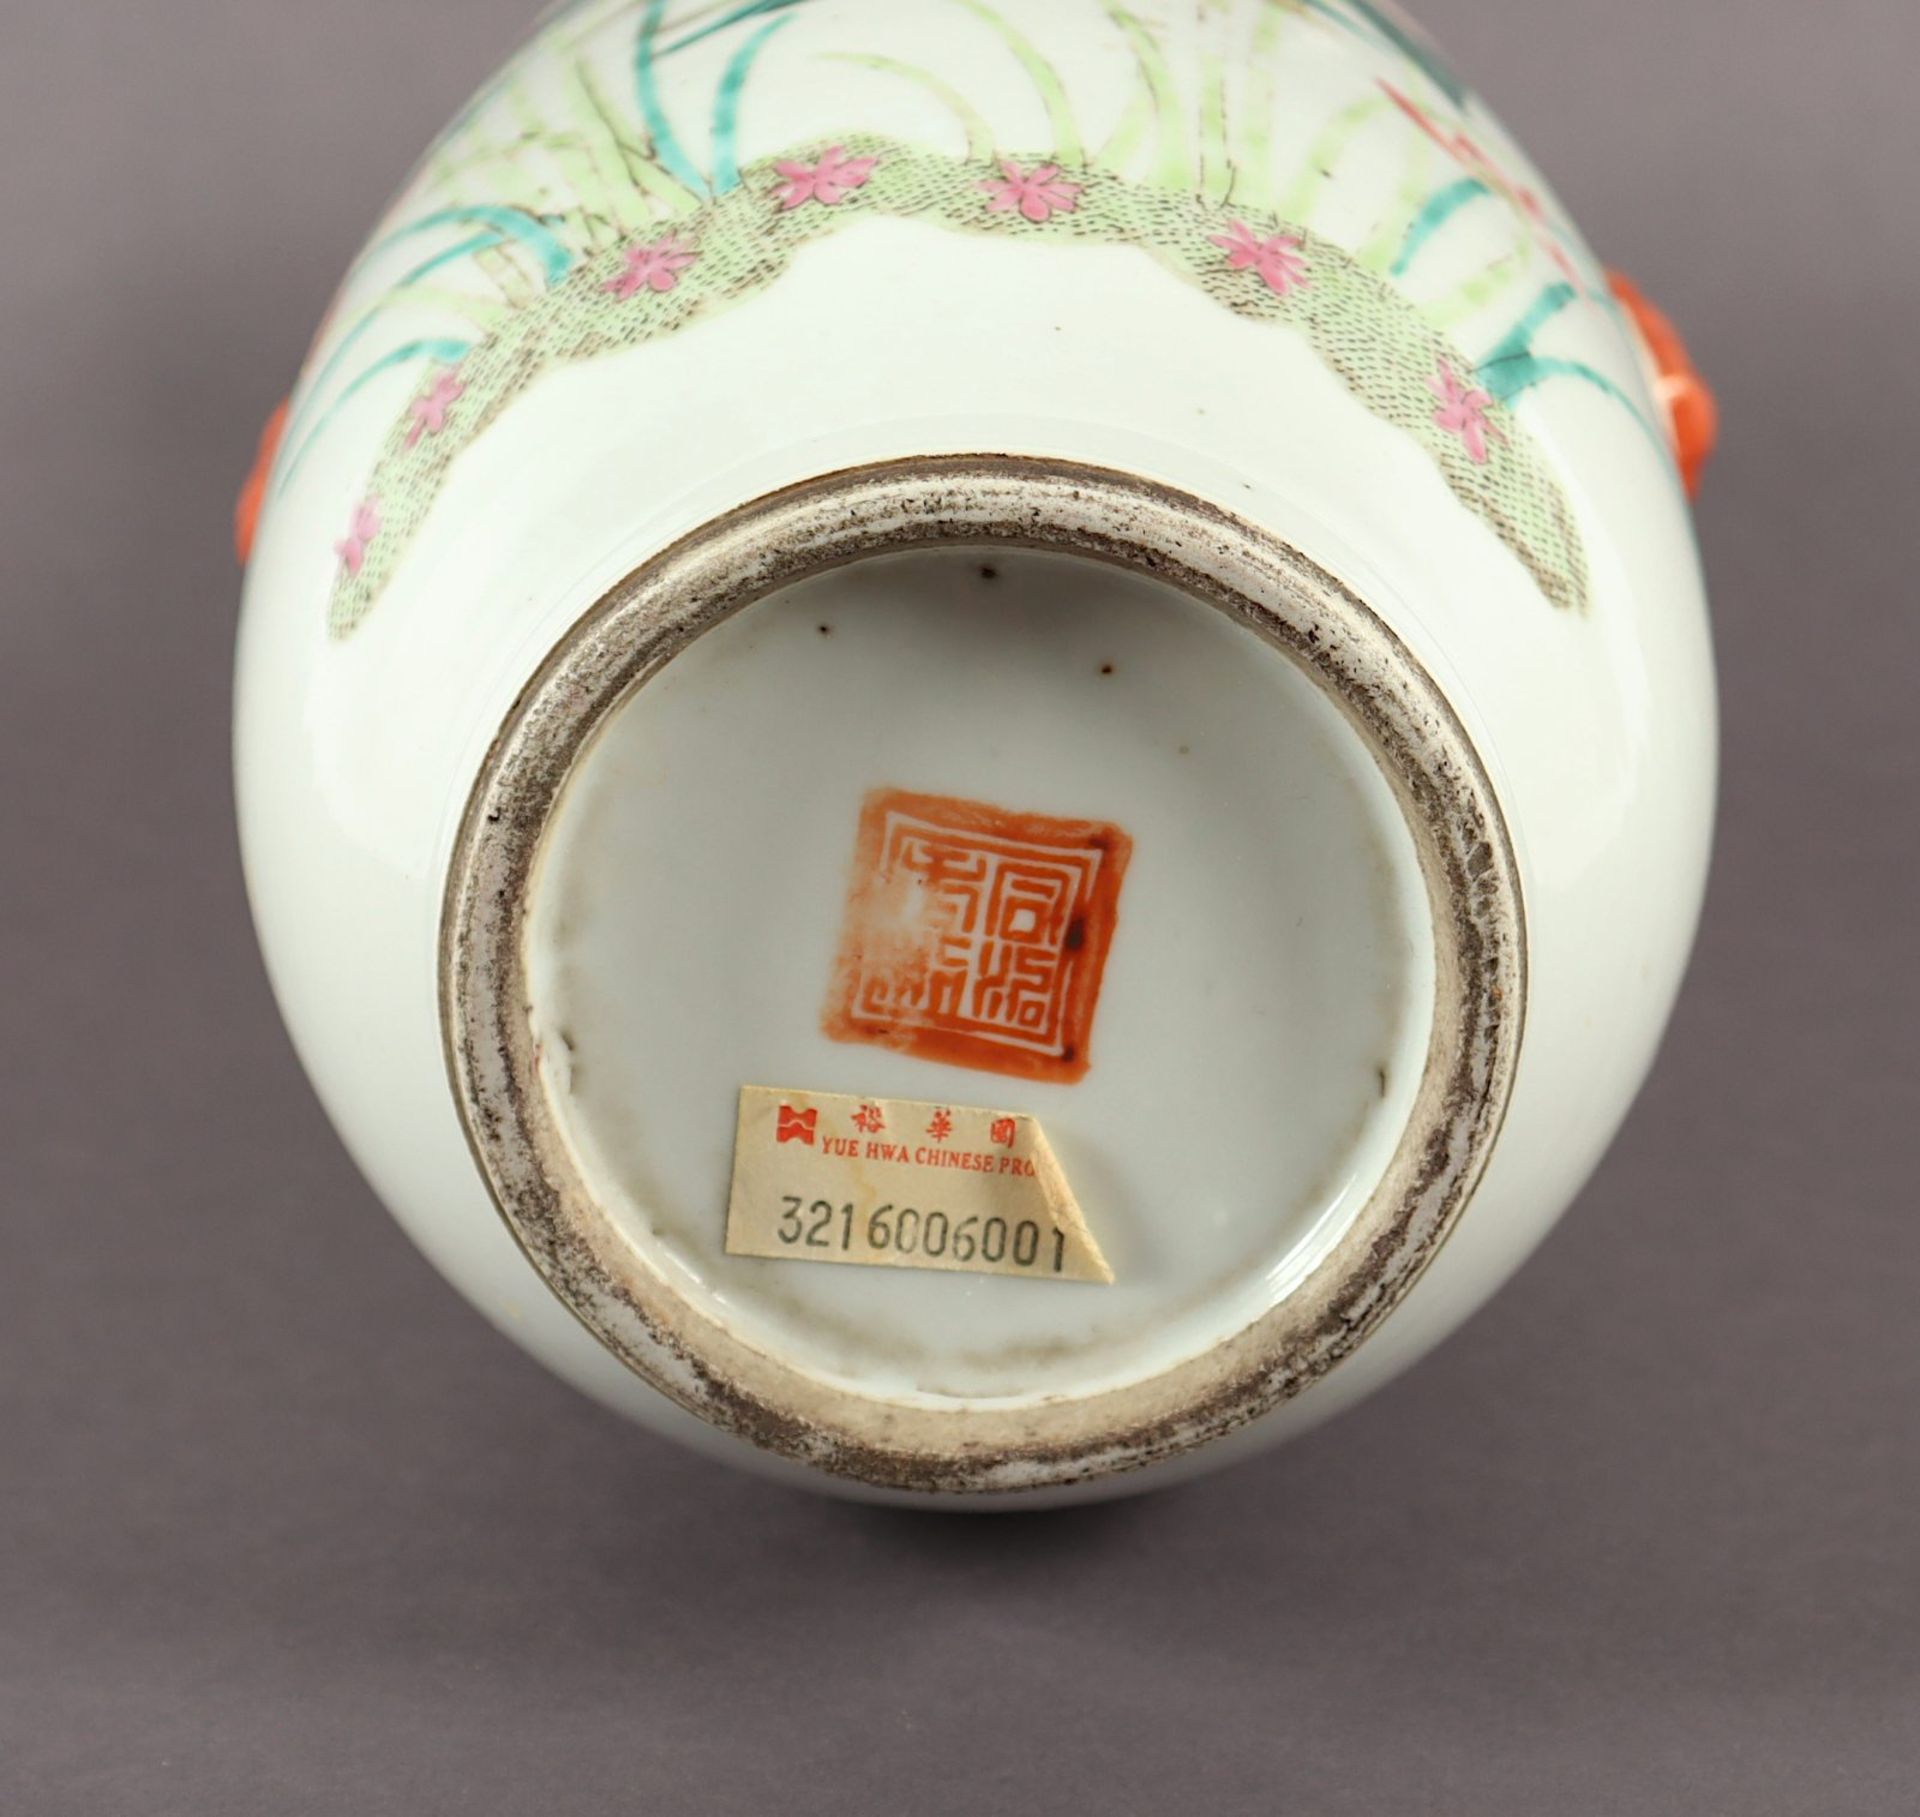 Vase, Porzellan, China, 20.Jh. - Image 3 of 3